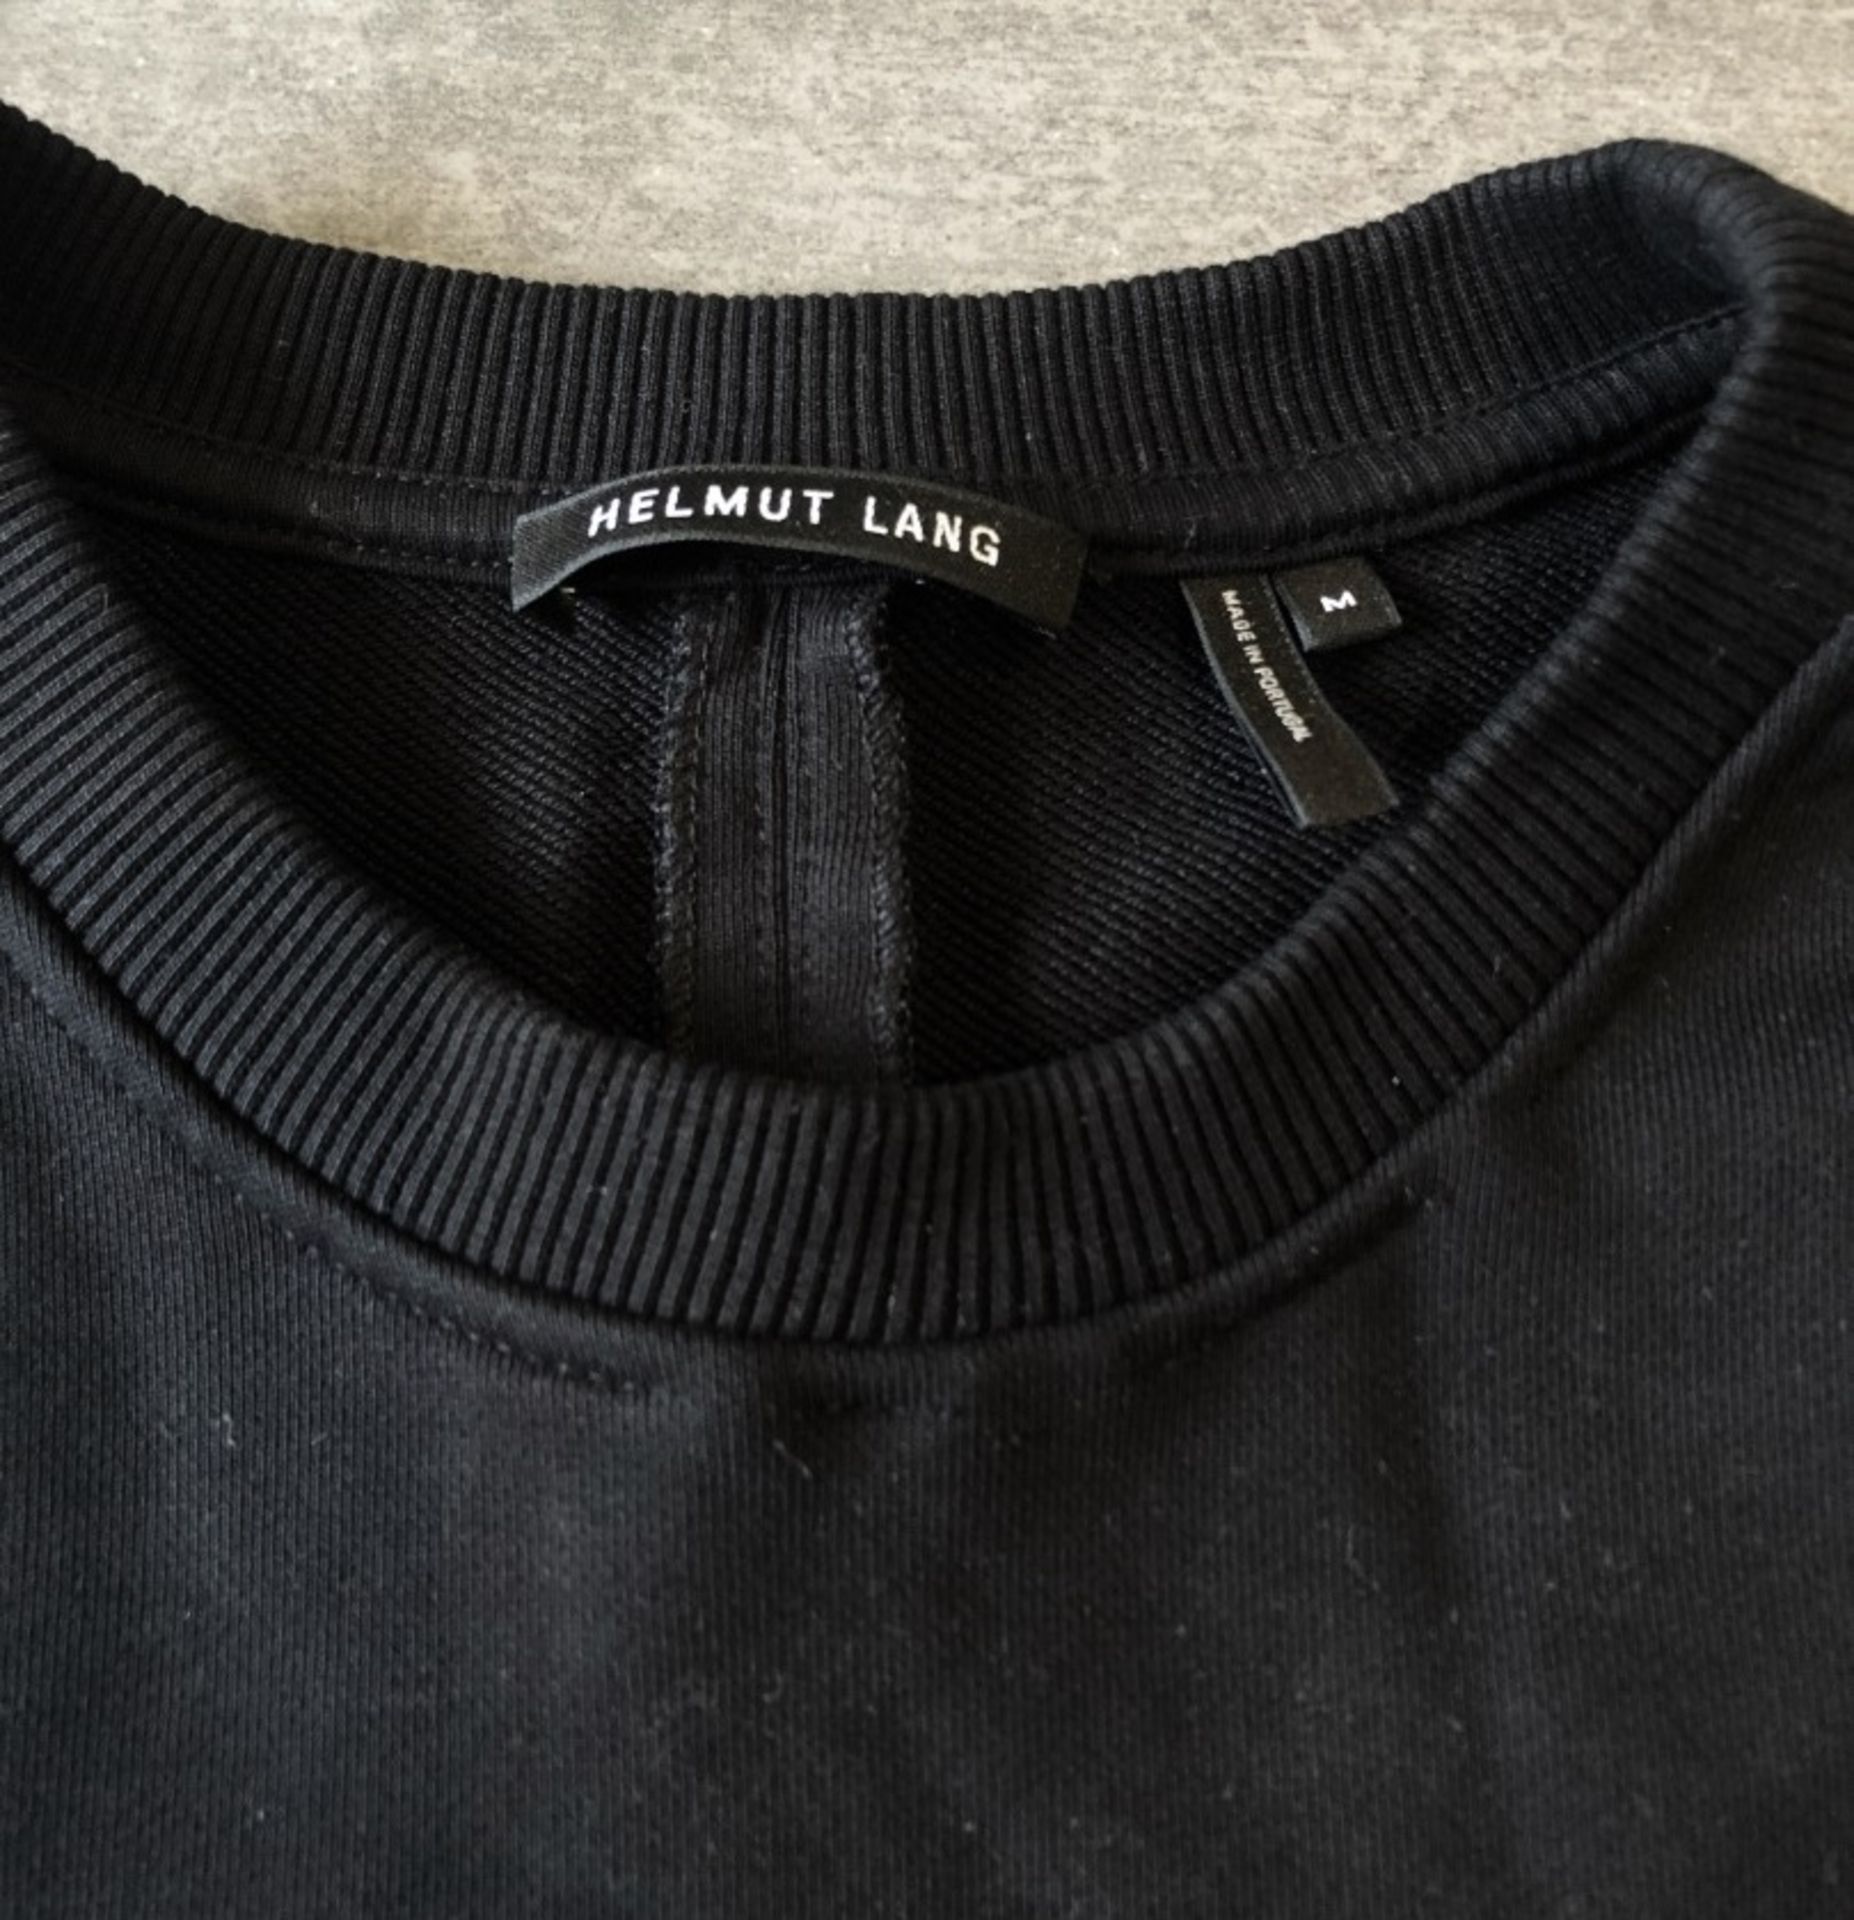 1 x Men's Genuine Helmut Lang Sweatshirt - Black - Size (EU/UK): M/M - Original RRP £180.00 - Image 3 of 7